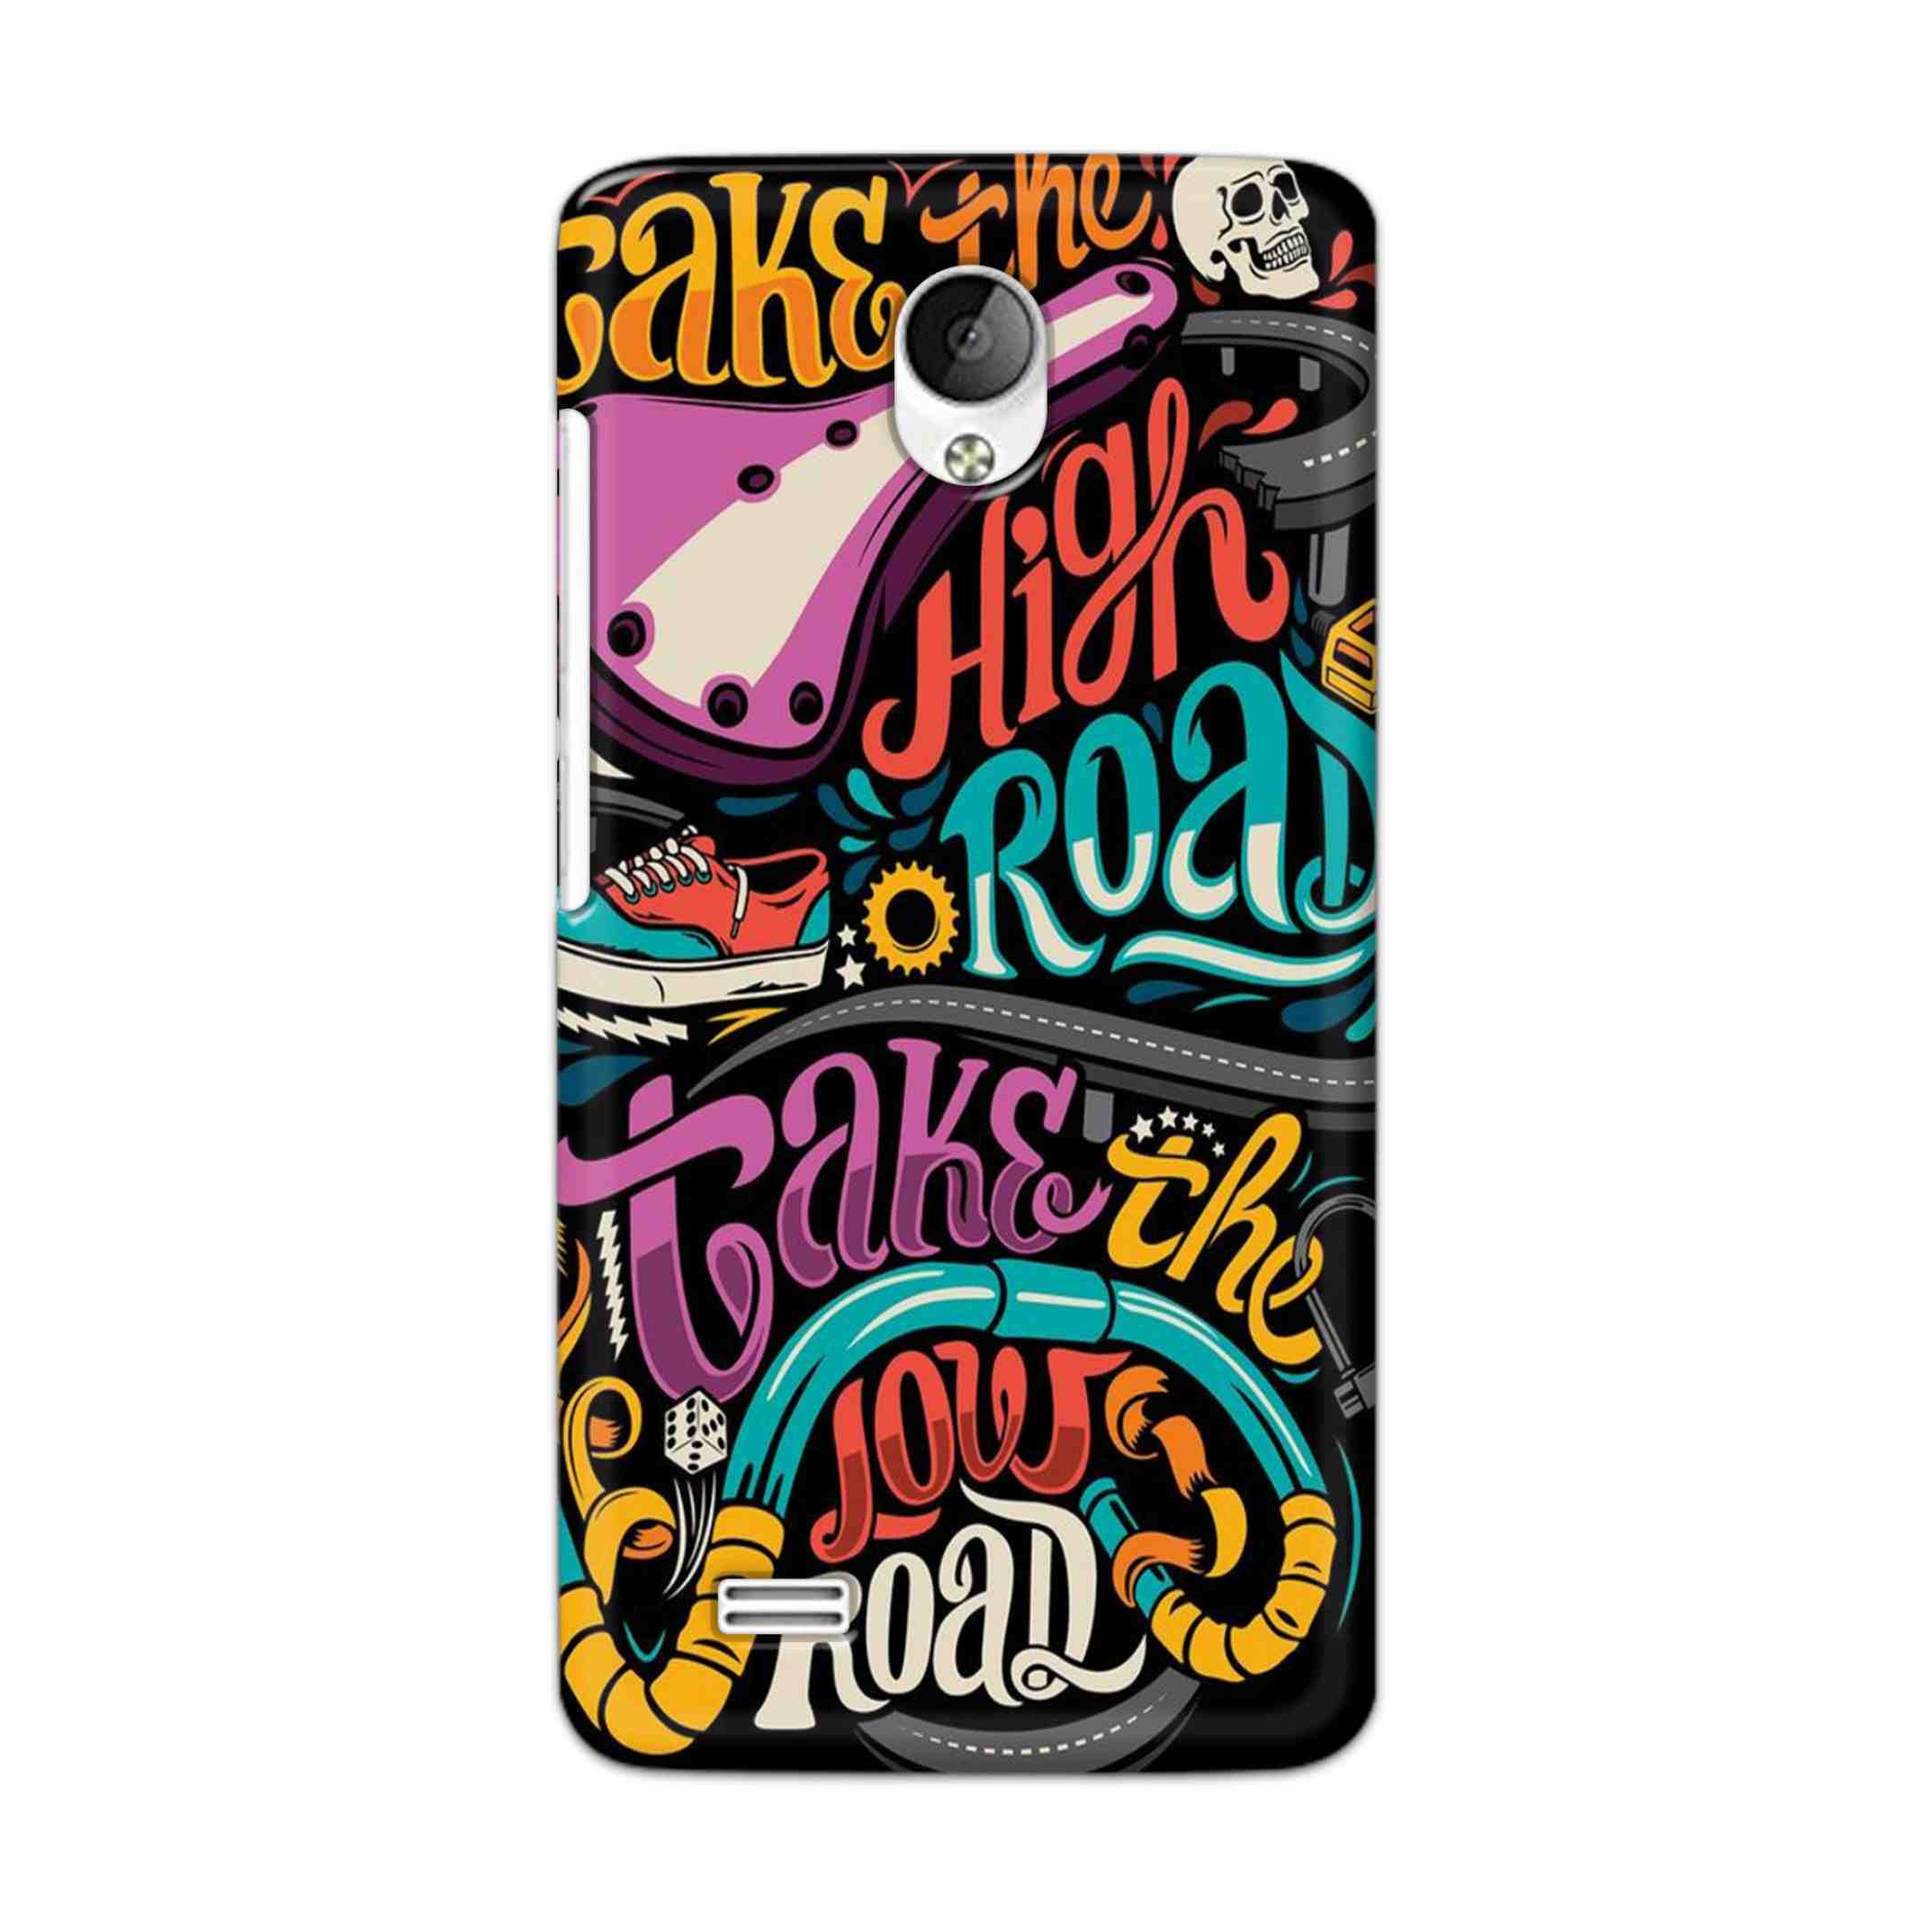 Buy Take The High Road Hard Back Mobile Phone Case Cover For Vivo Y21 / Vivo Y21L Online